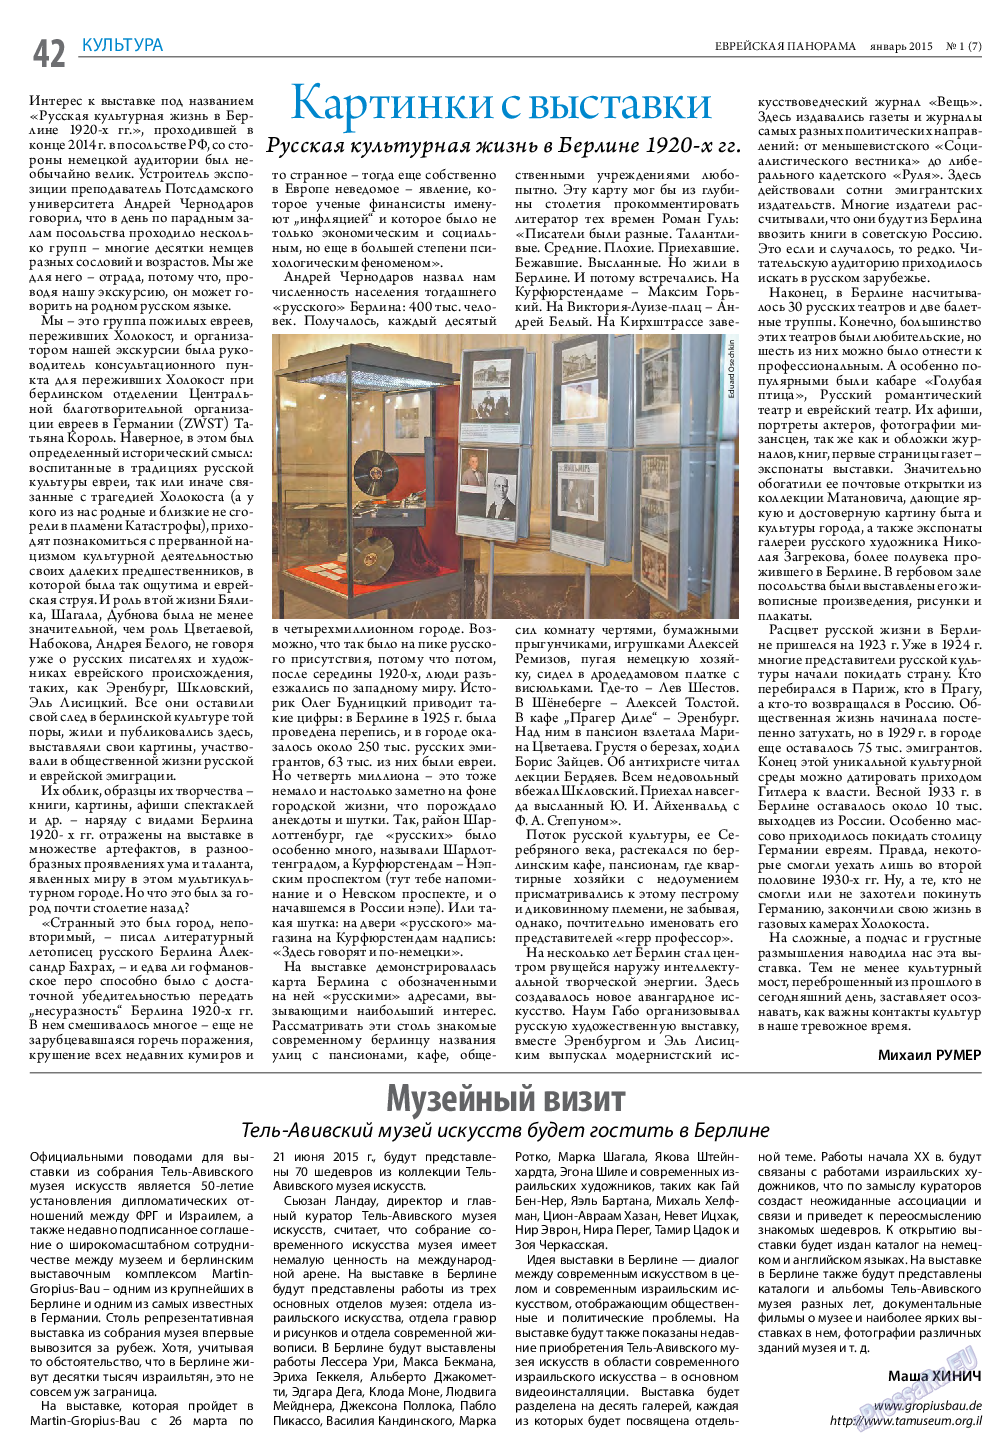 Еврейская панорама, газета. 2015 №1 стр.42